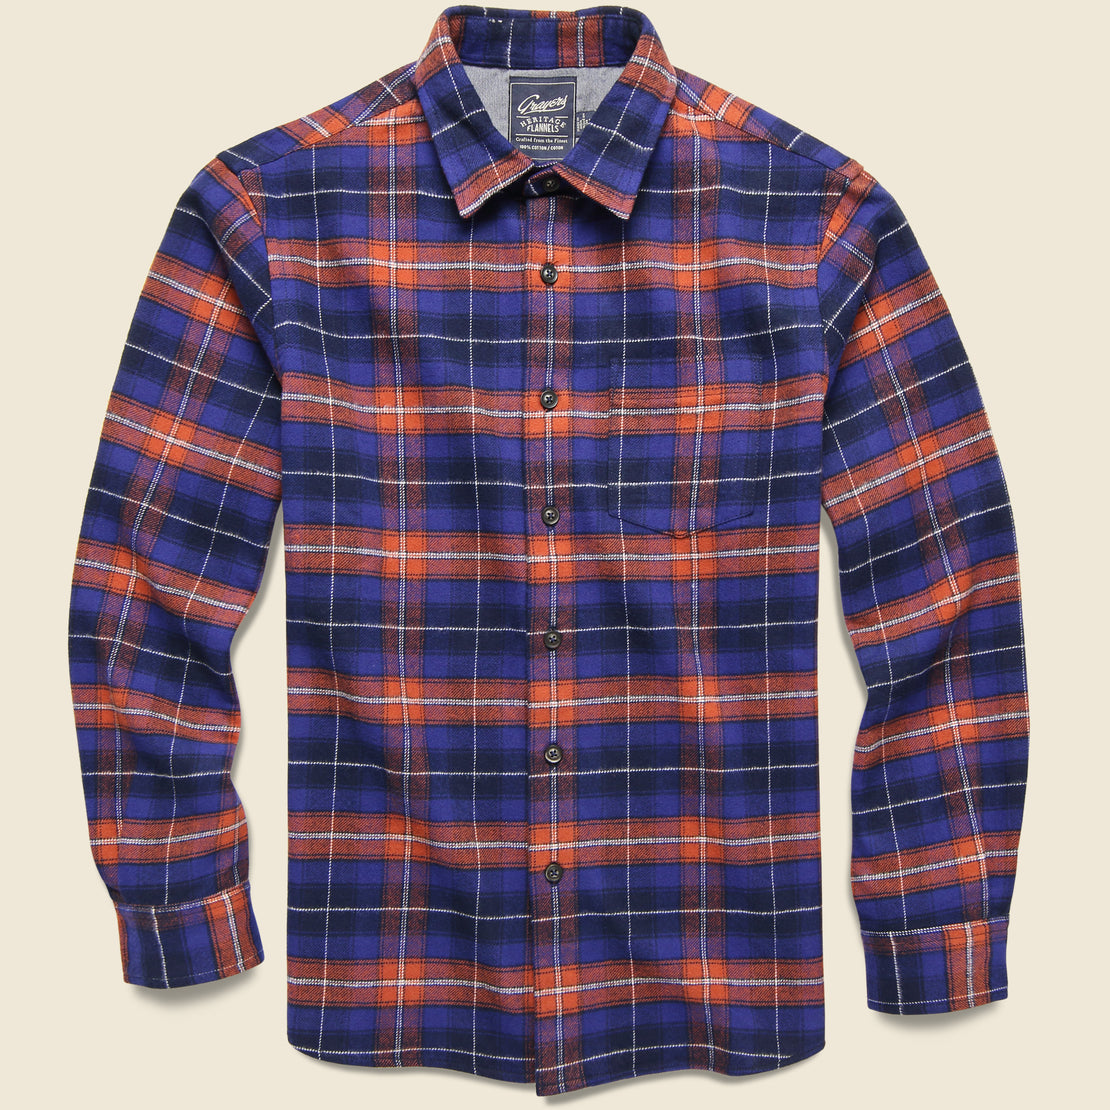 Grayers Durango Heritage Flannel Shirt - Twilight Blue Plaid